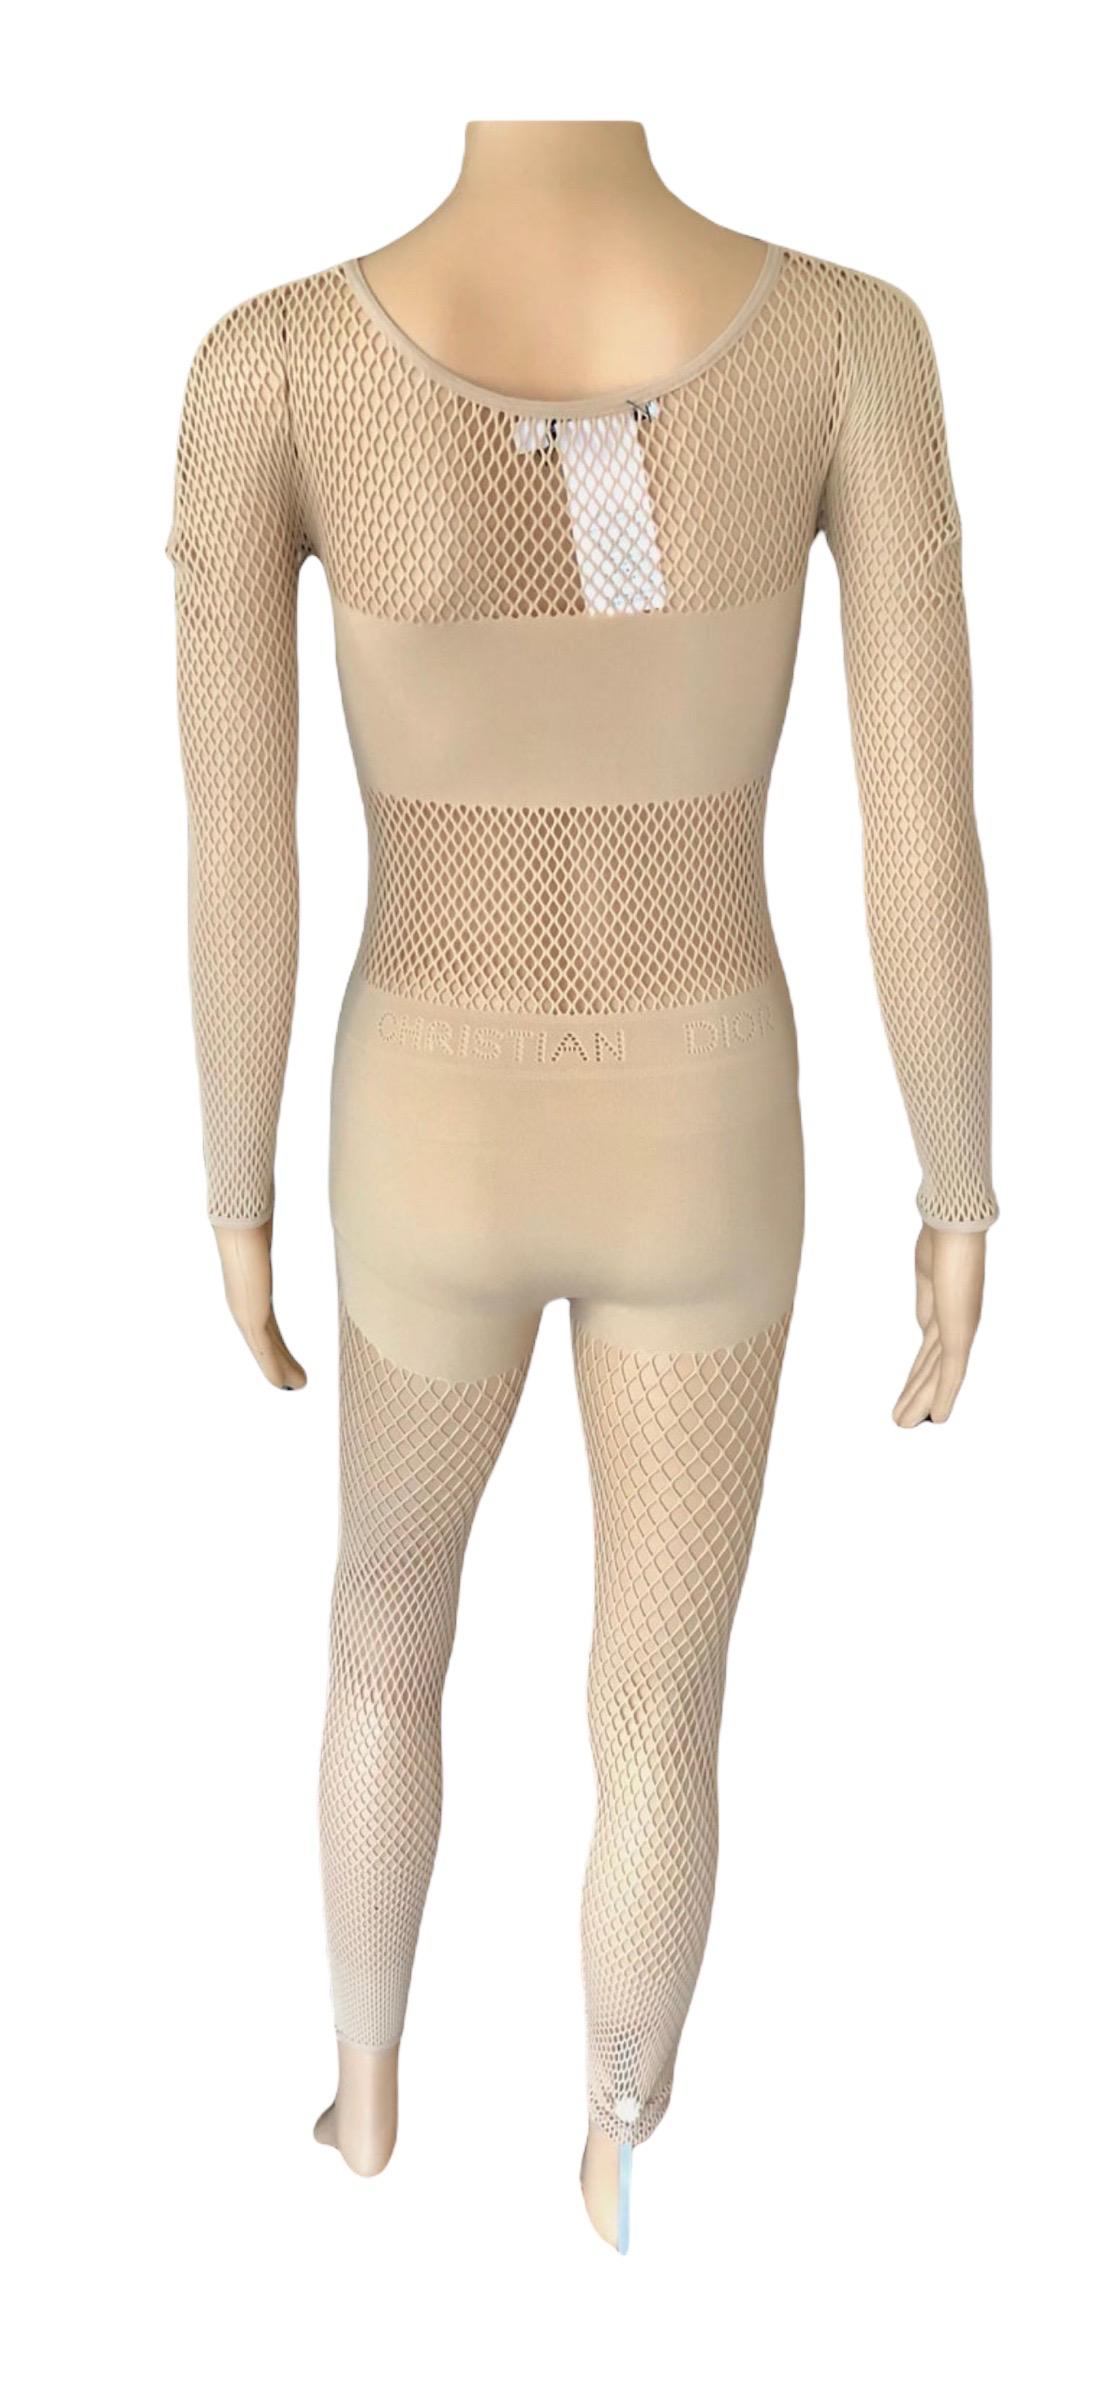 New Christian Dior Logo Monogram Sheer Mesh Fishnet Bodysuit Playsuit Jumpsuit 6